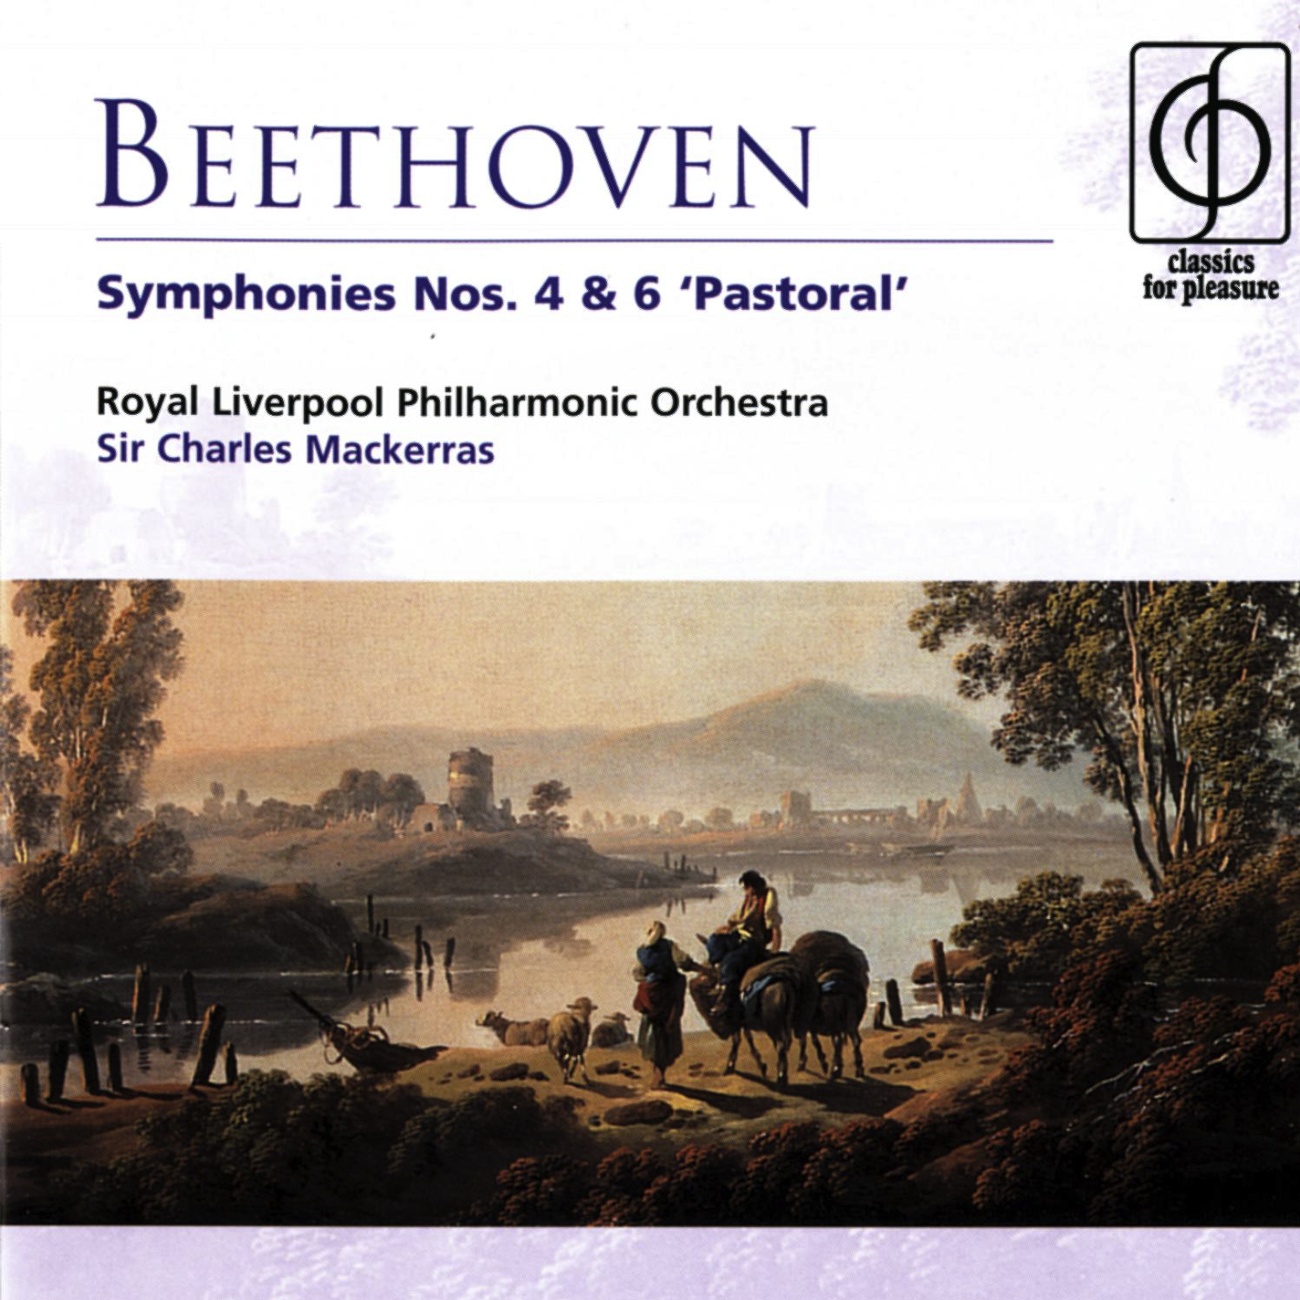 Beethoven Symphonies Nos. 4 & 6 'Pastoral'